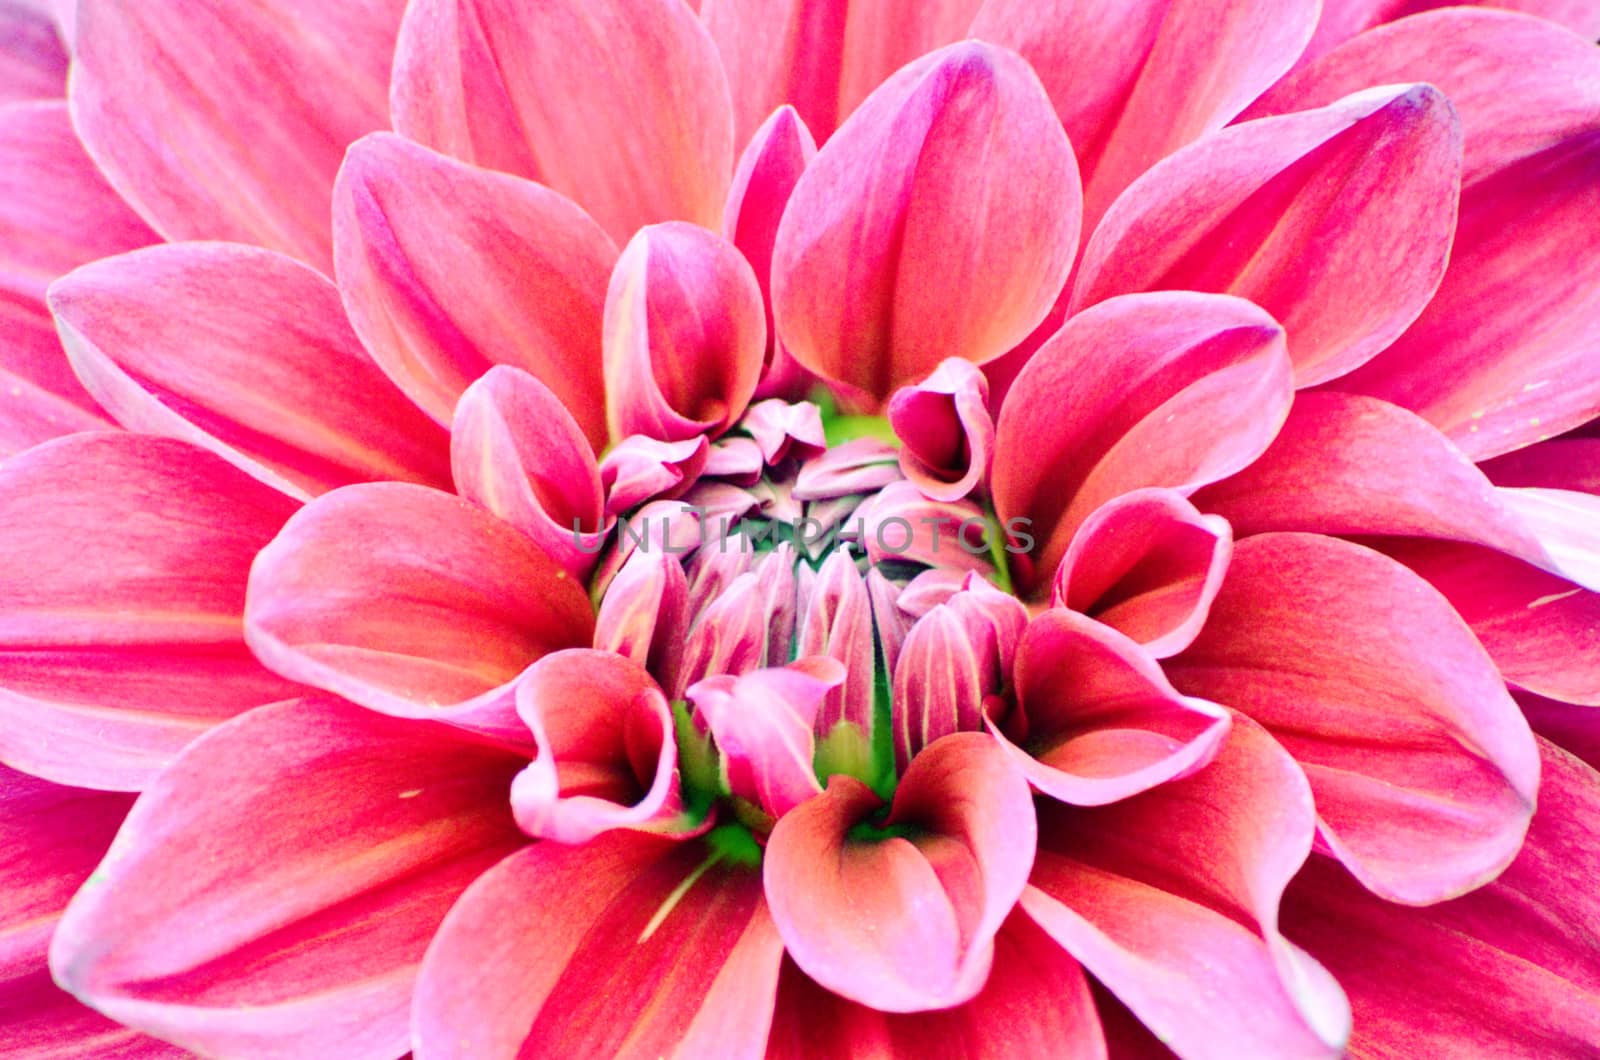 The closeup surface of dahlia flower by Emdaduljs